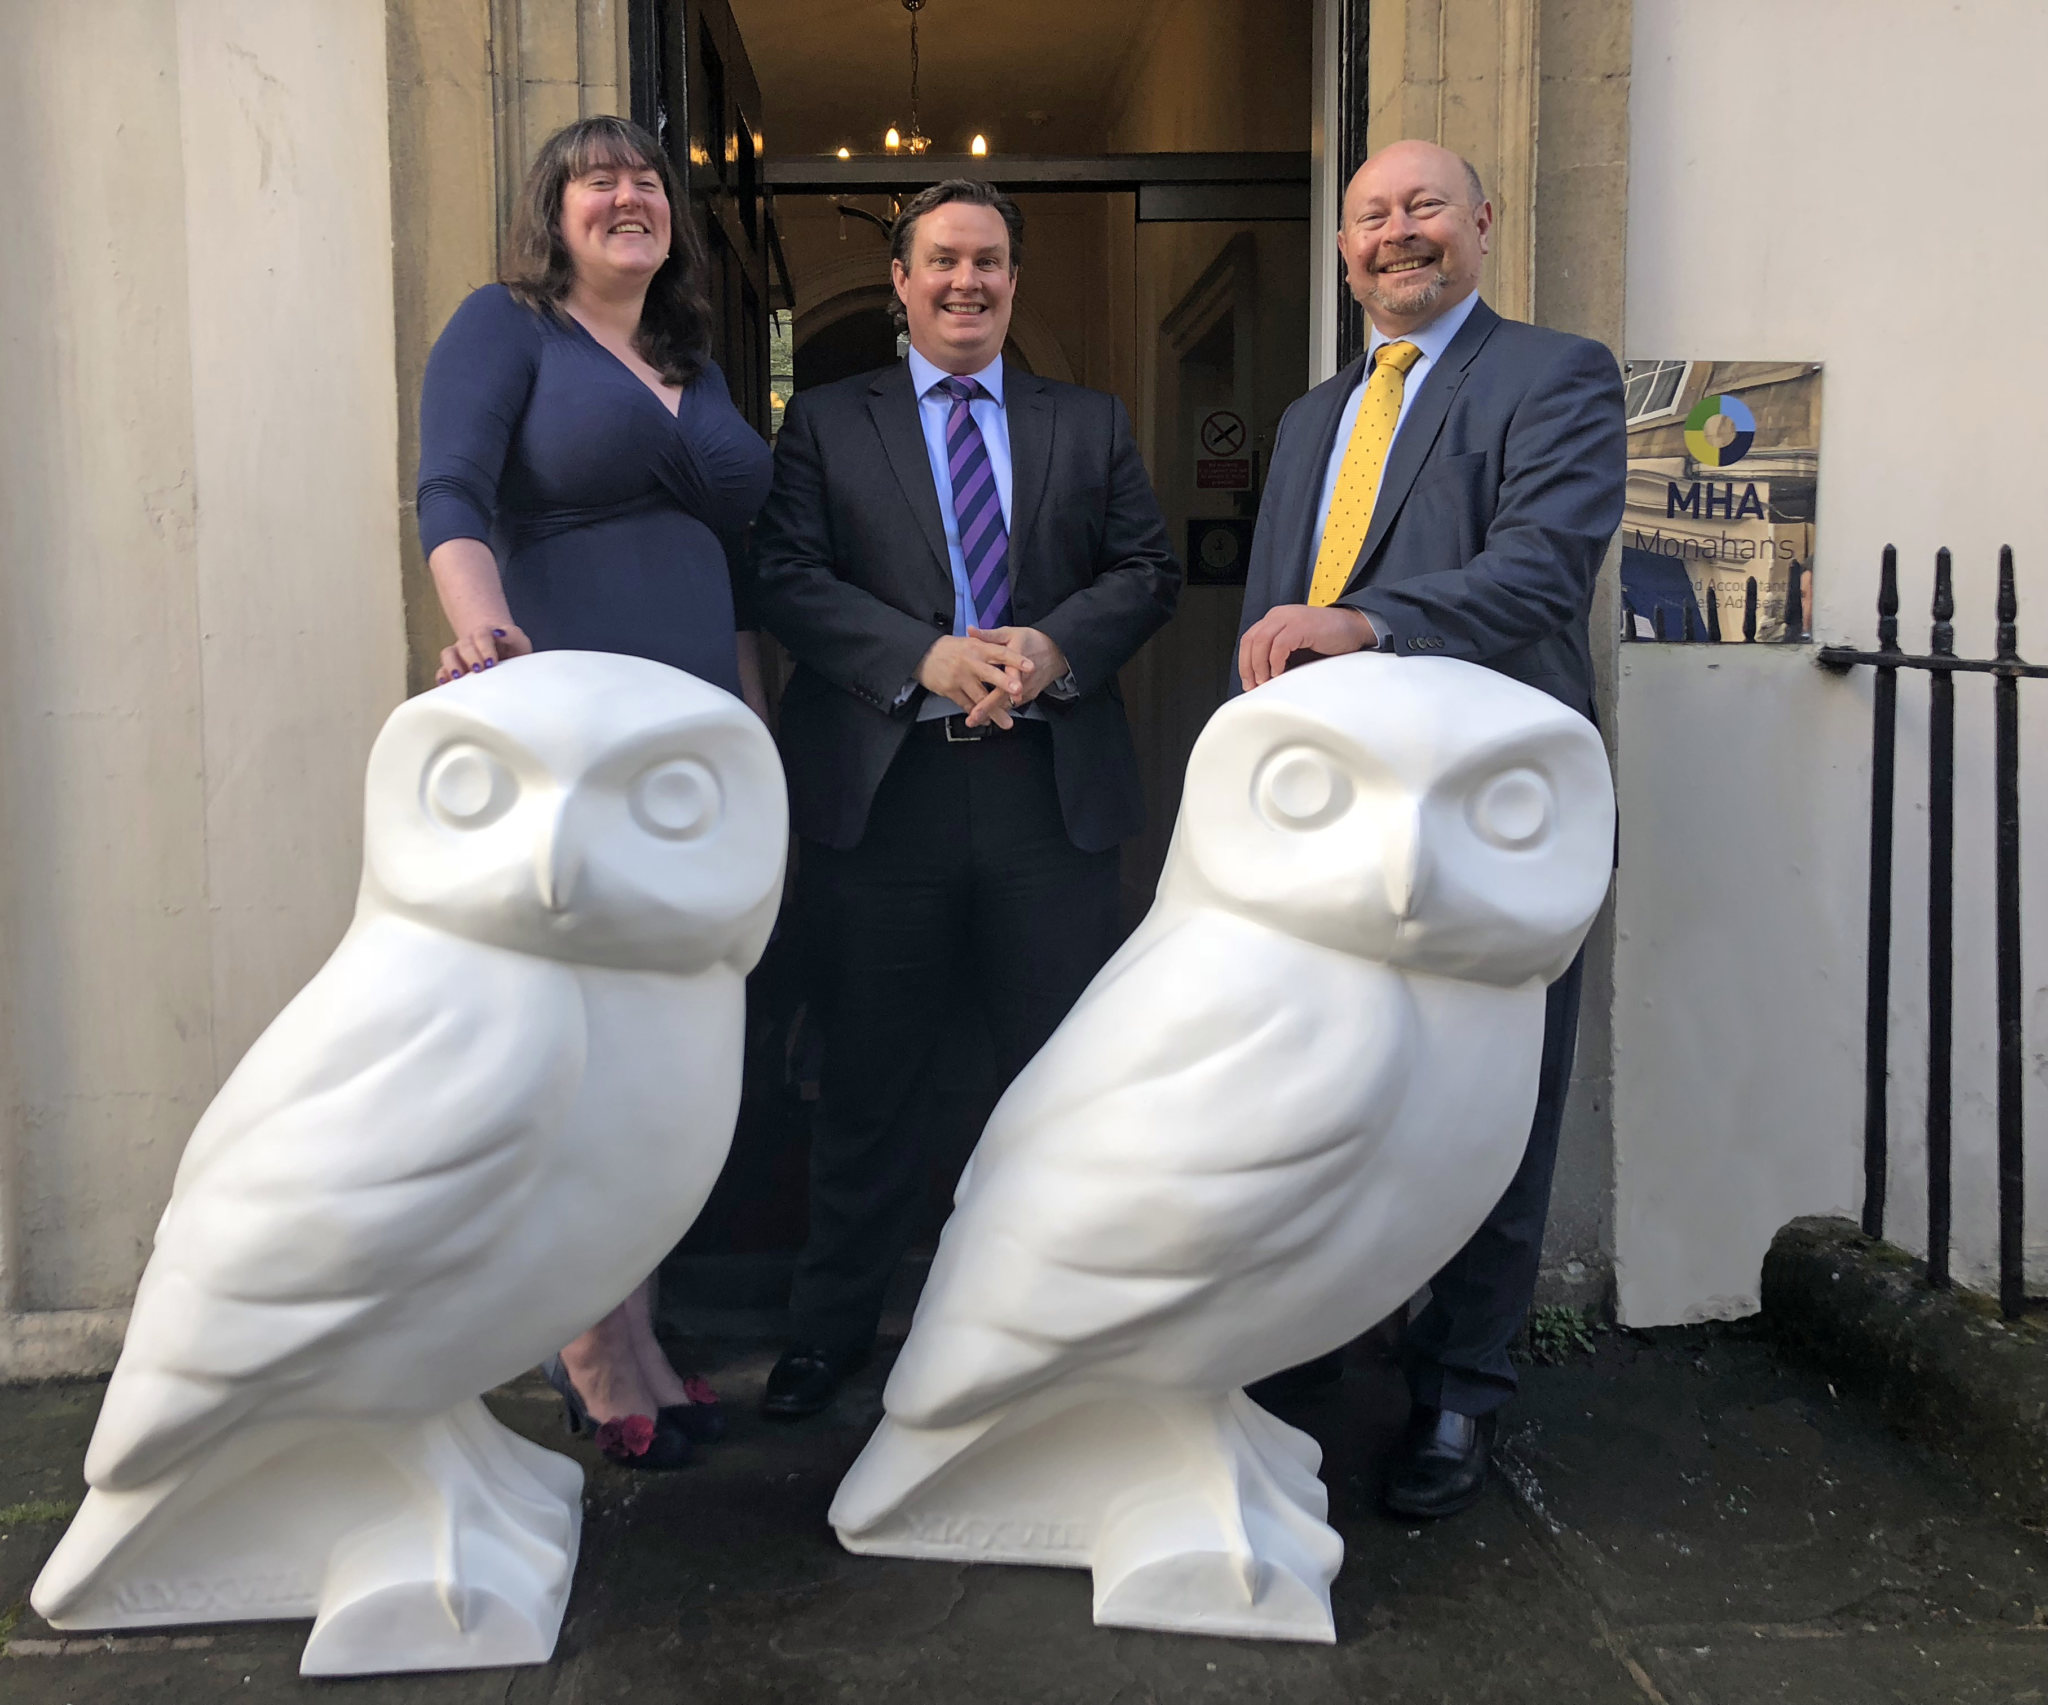 MHA Monahan chooses Bath artists to decorate their Owls